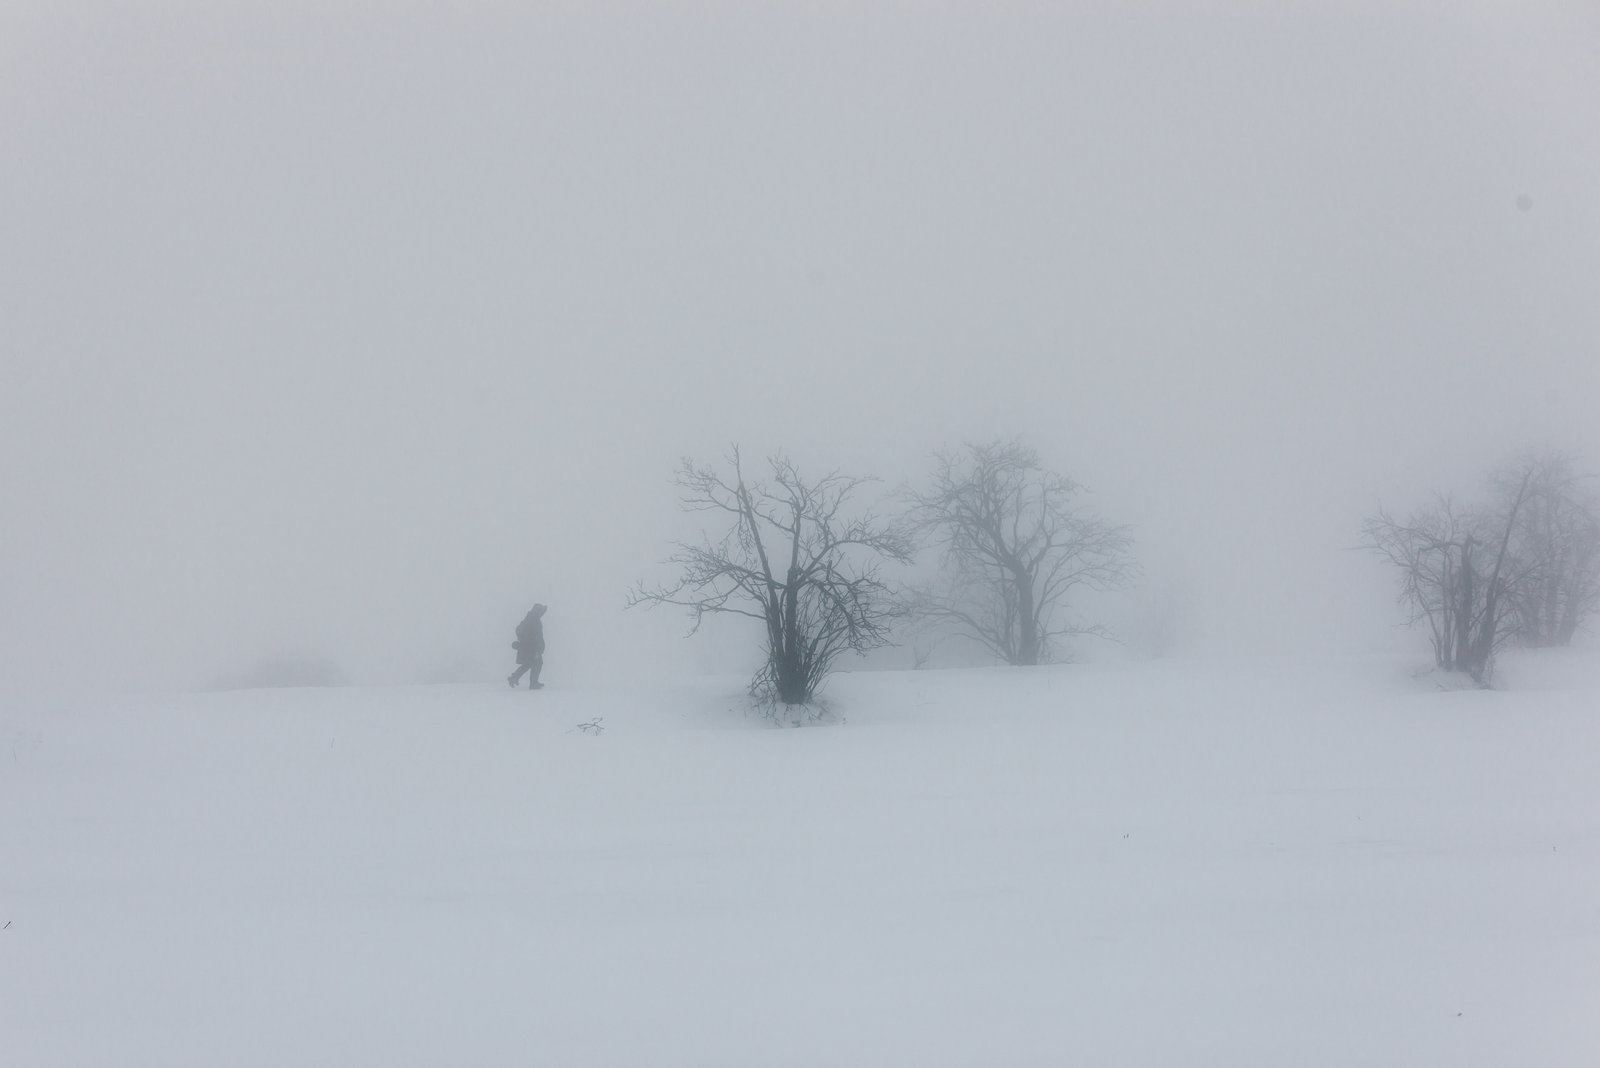 Spaziergang im Nebel -  20150101